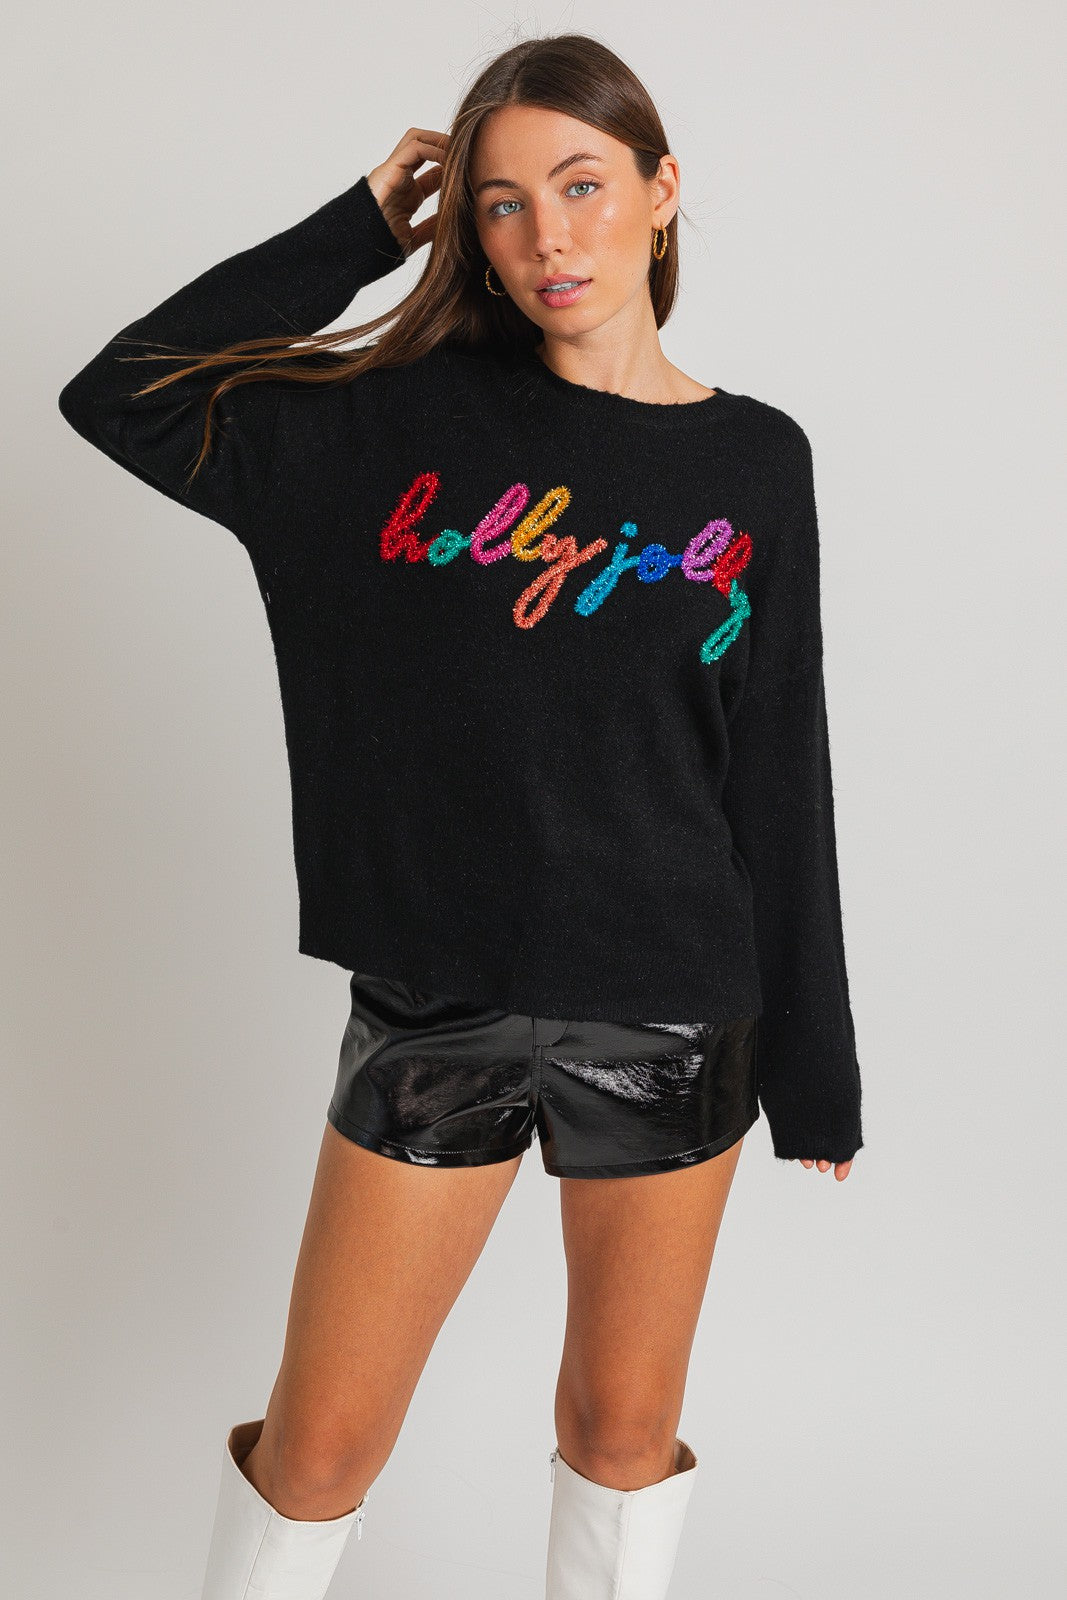 Holly Jolly Glitter Script Sweater PREORDER 11/5